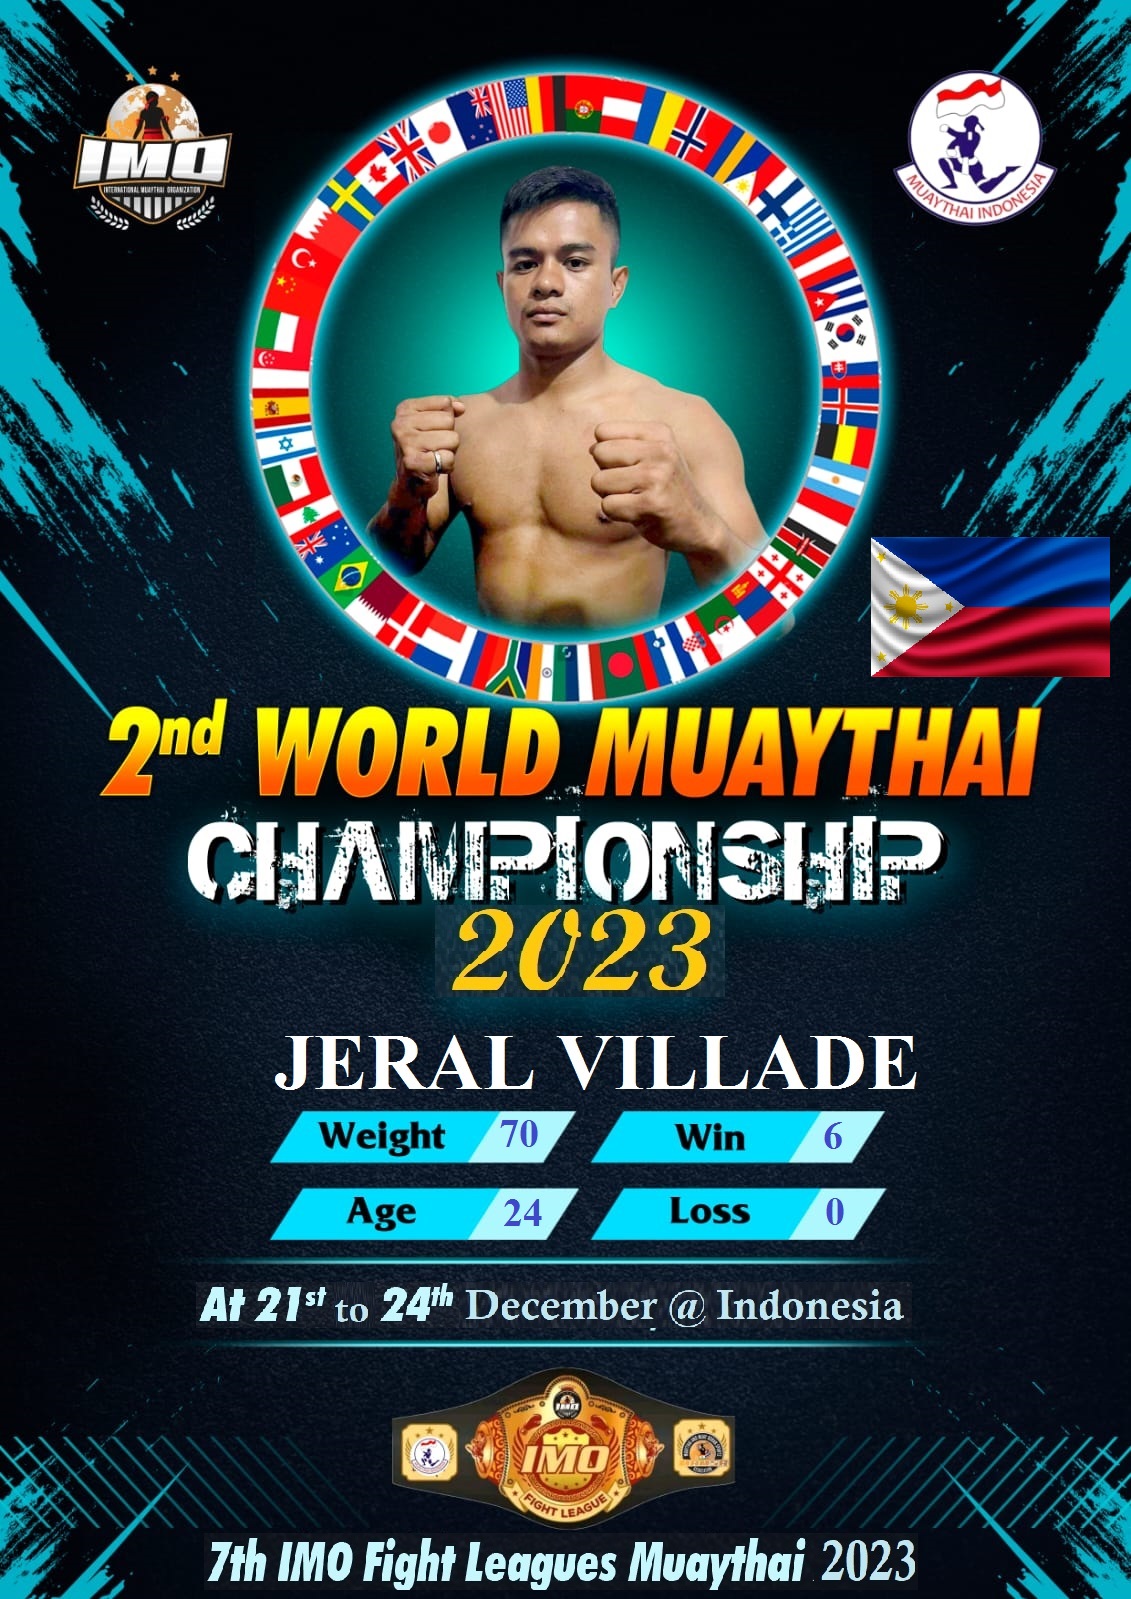 2nd world muaythai championship -2023 Indonesia 